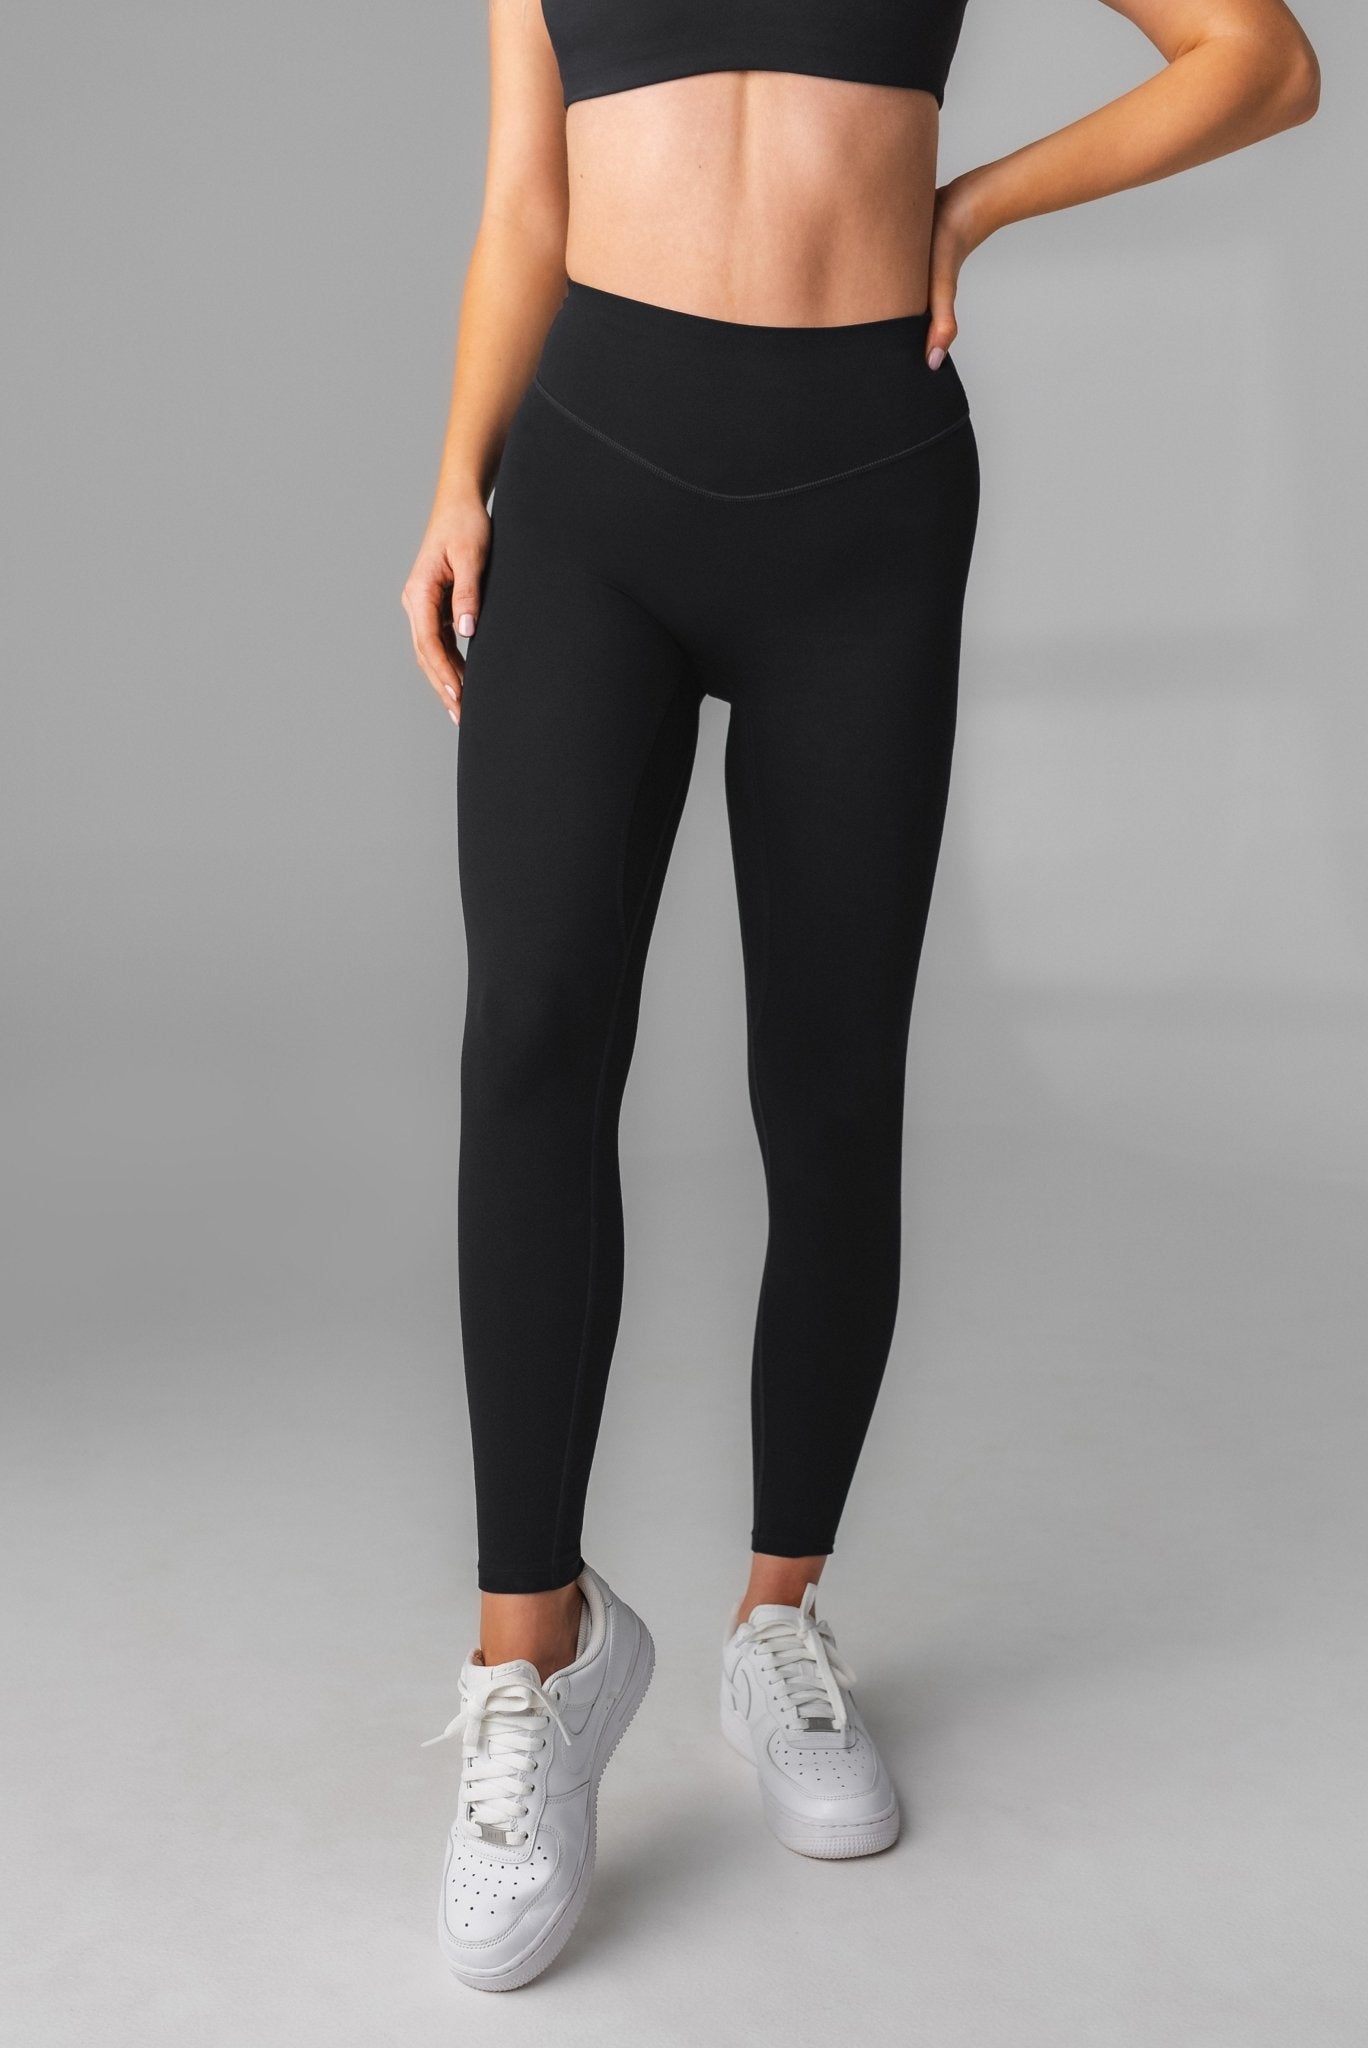 Sweat Proof Activewear | 7/8 Length Leggings - Dusty Rose | Idea Athletic